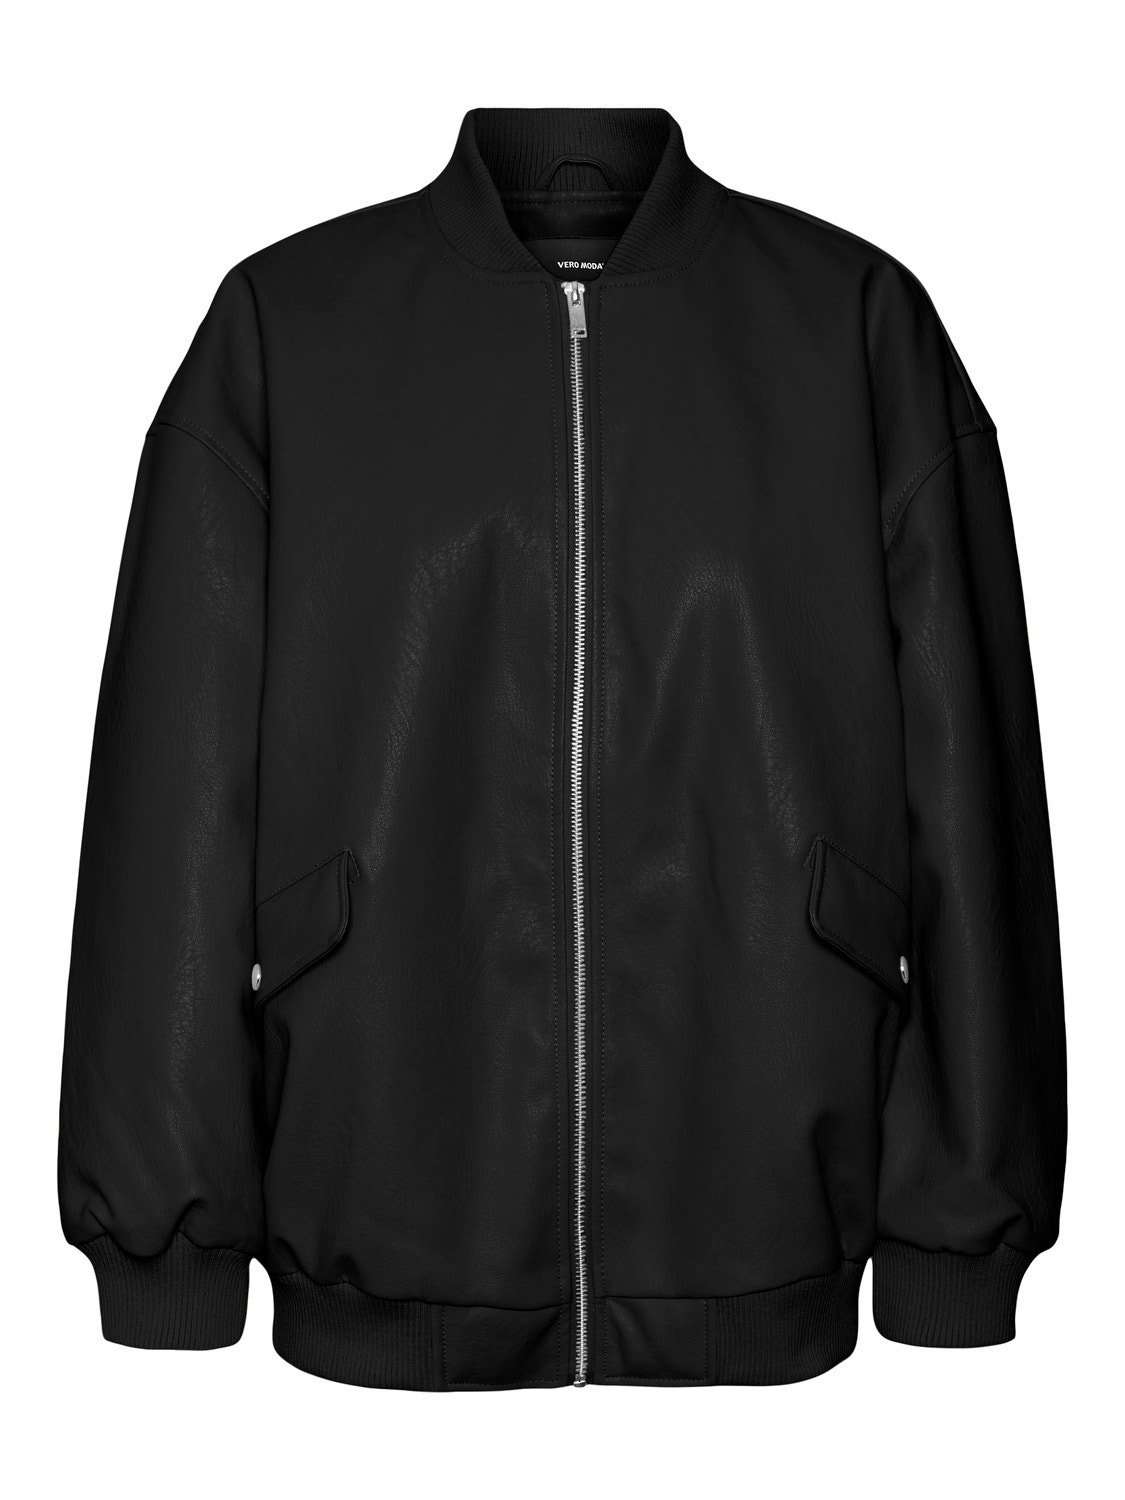 Vero Moda VMAGATE Jacket -Black - 10301078